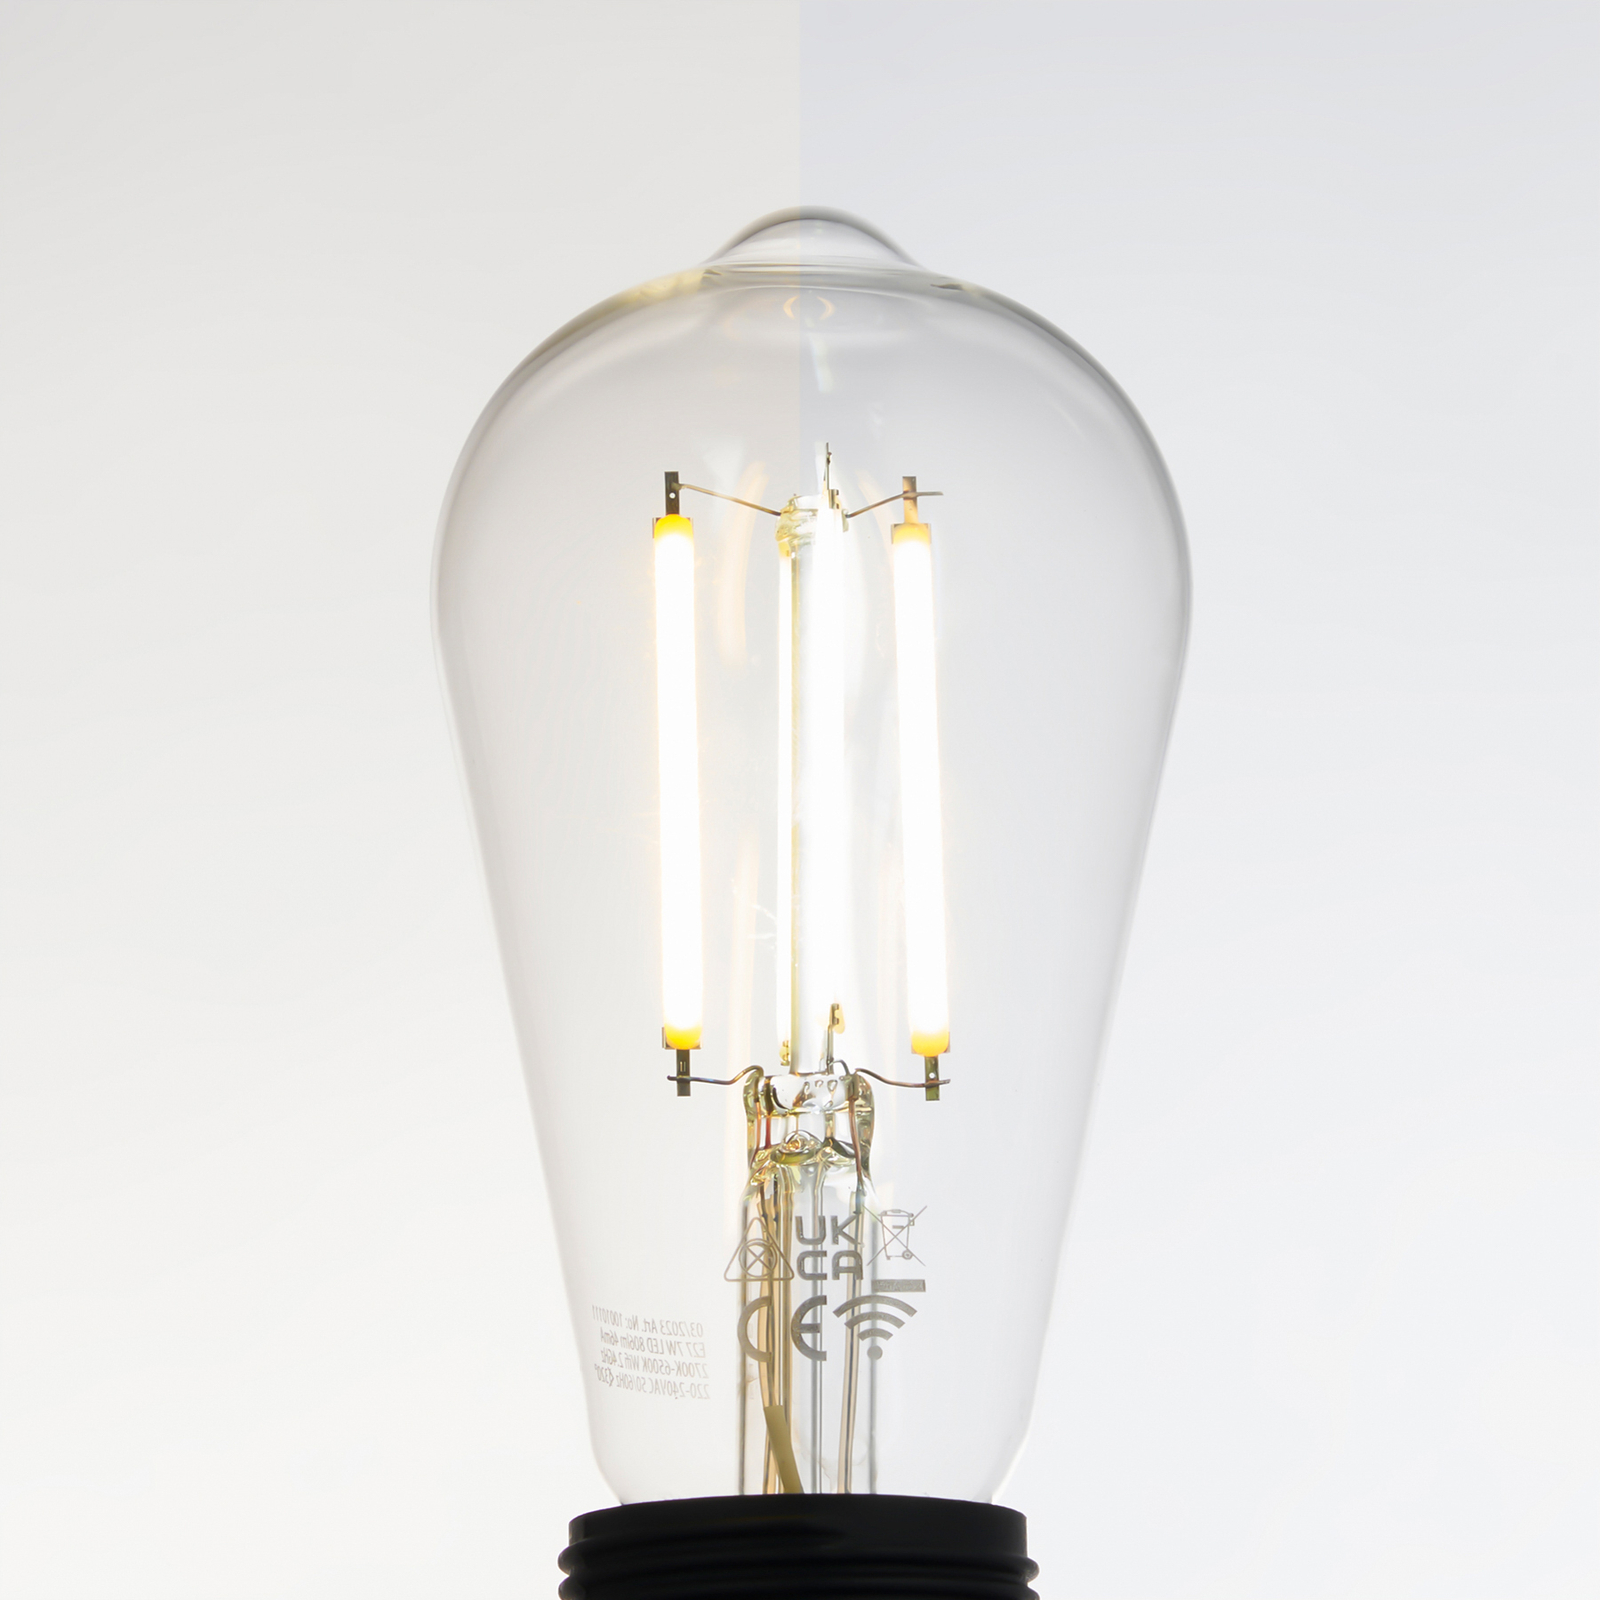 LUUMR Smart ampoule LED claire E27 ST64 7W Tuya WLAN CCT